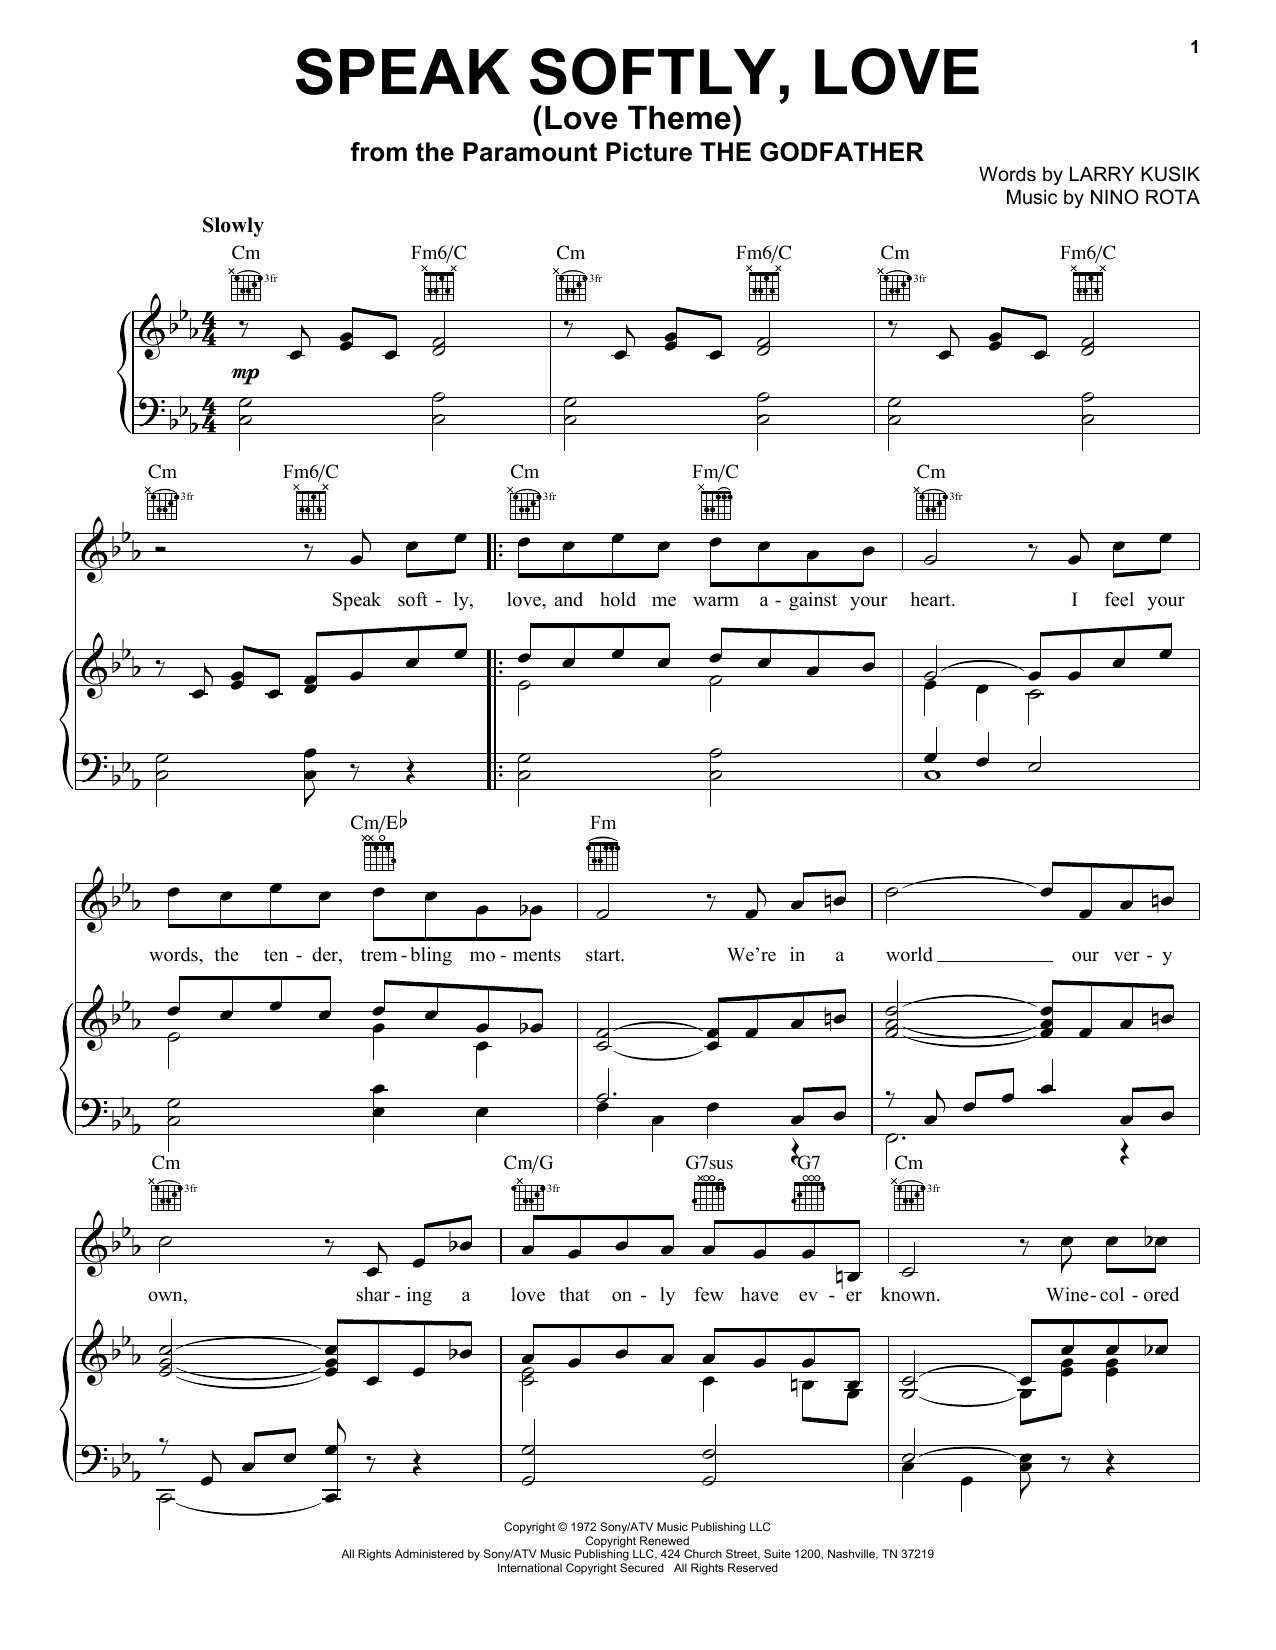 Andy Williams Speak Softly, Love (Love Theme) sheet music notes printable PDF score